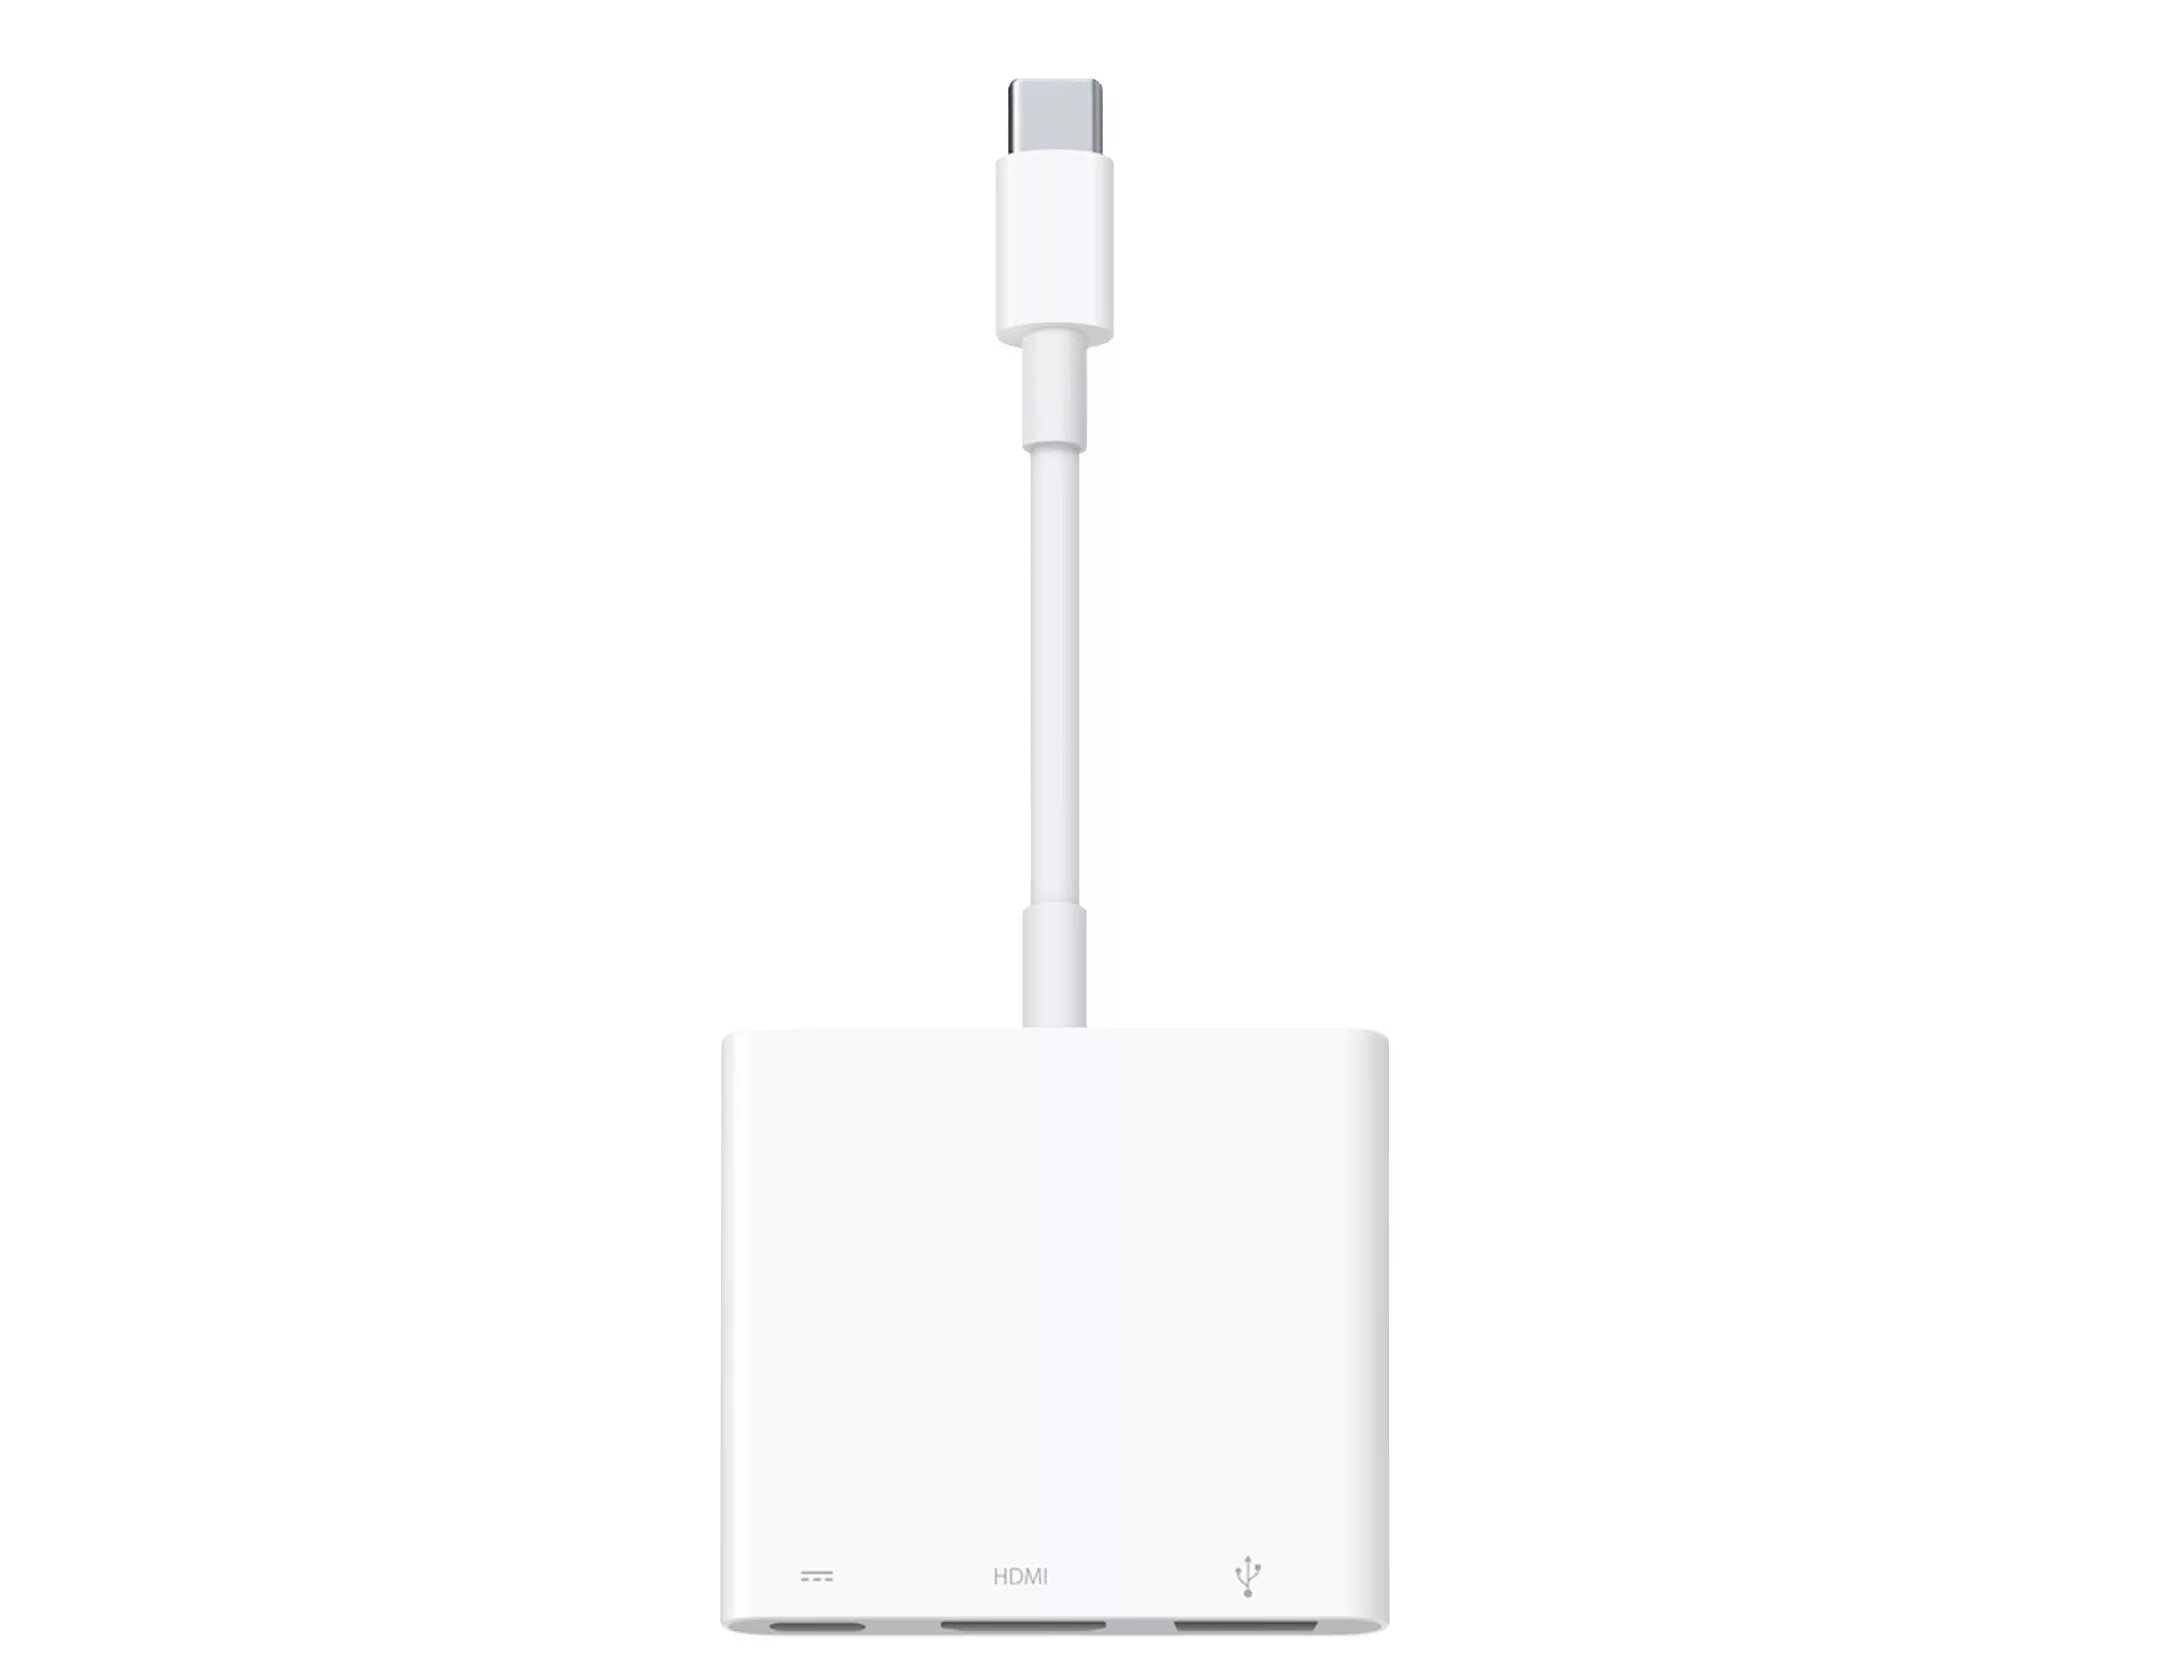 Apple Lightning to USB Camera Adapter. Переходник Apple USB-C to USB. Адаптер Apple md821. Адаптер Lightning/USB 3 для подключения камеры (mk0w2zm/a).